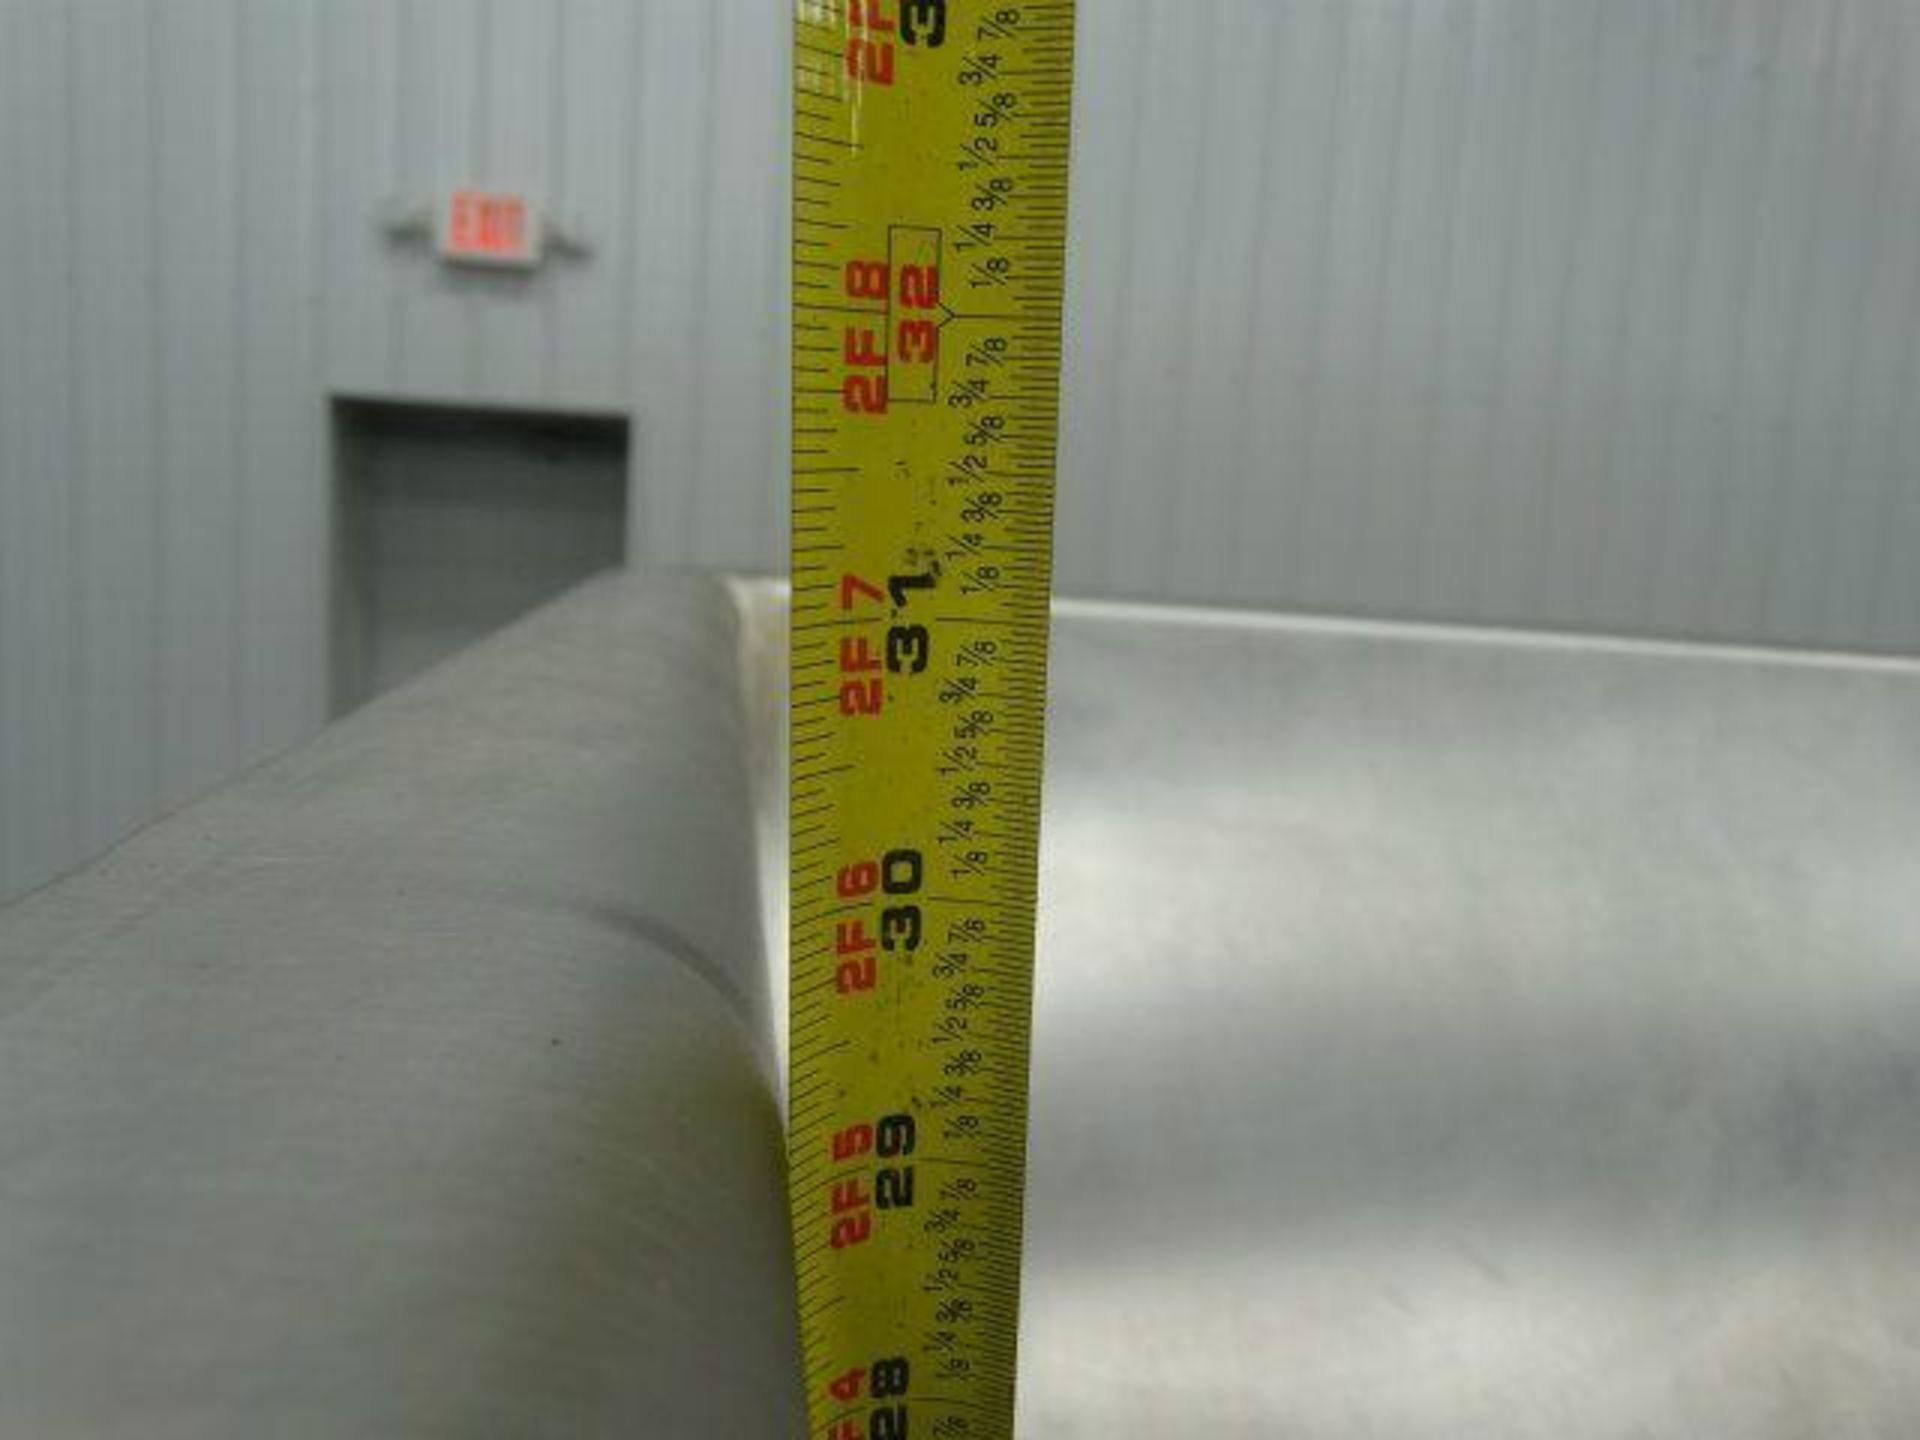 Friesen SS auger screw conveyor {Pendleton, IN} - Image 30 of 39